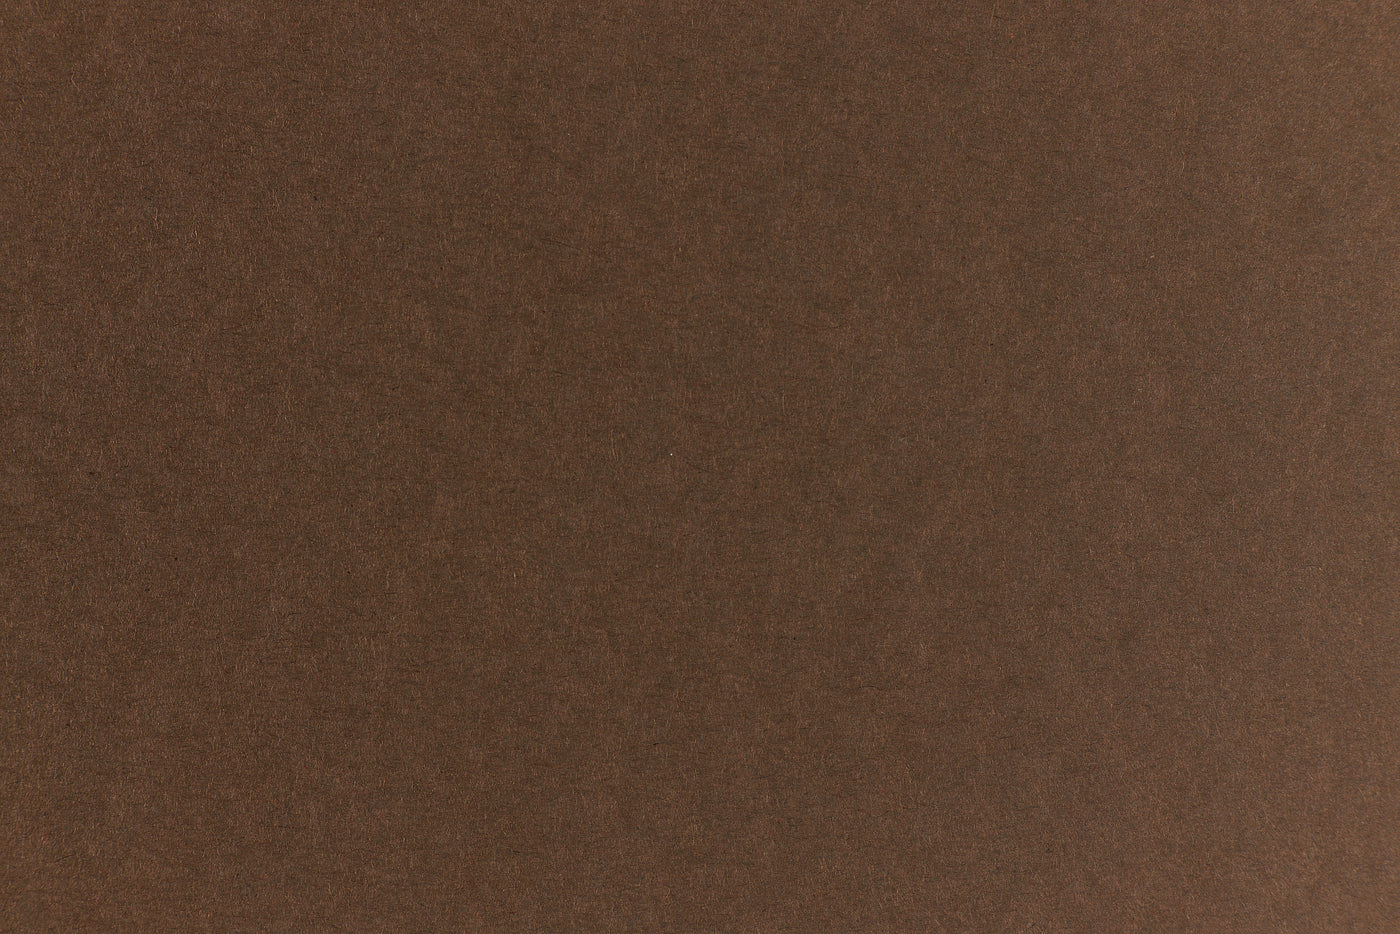 Chocolate Envelope (Speckletone)